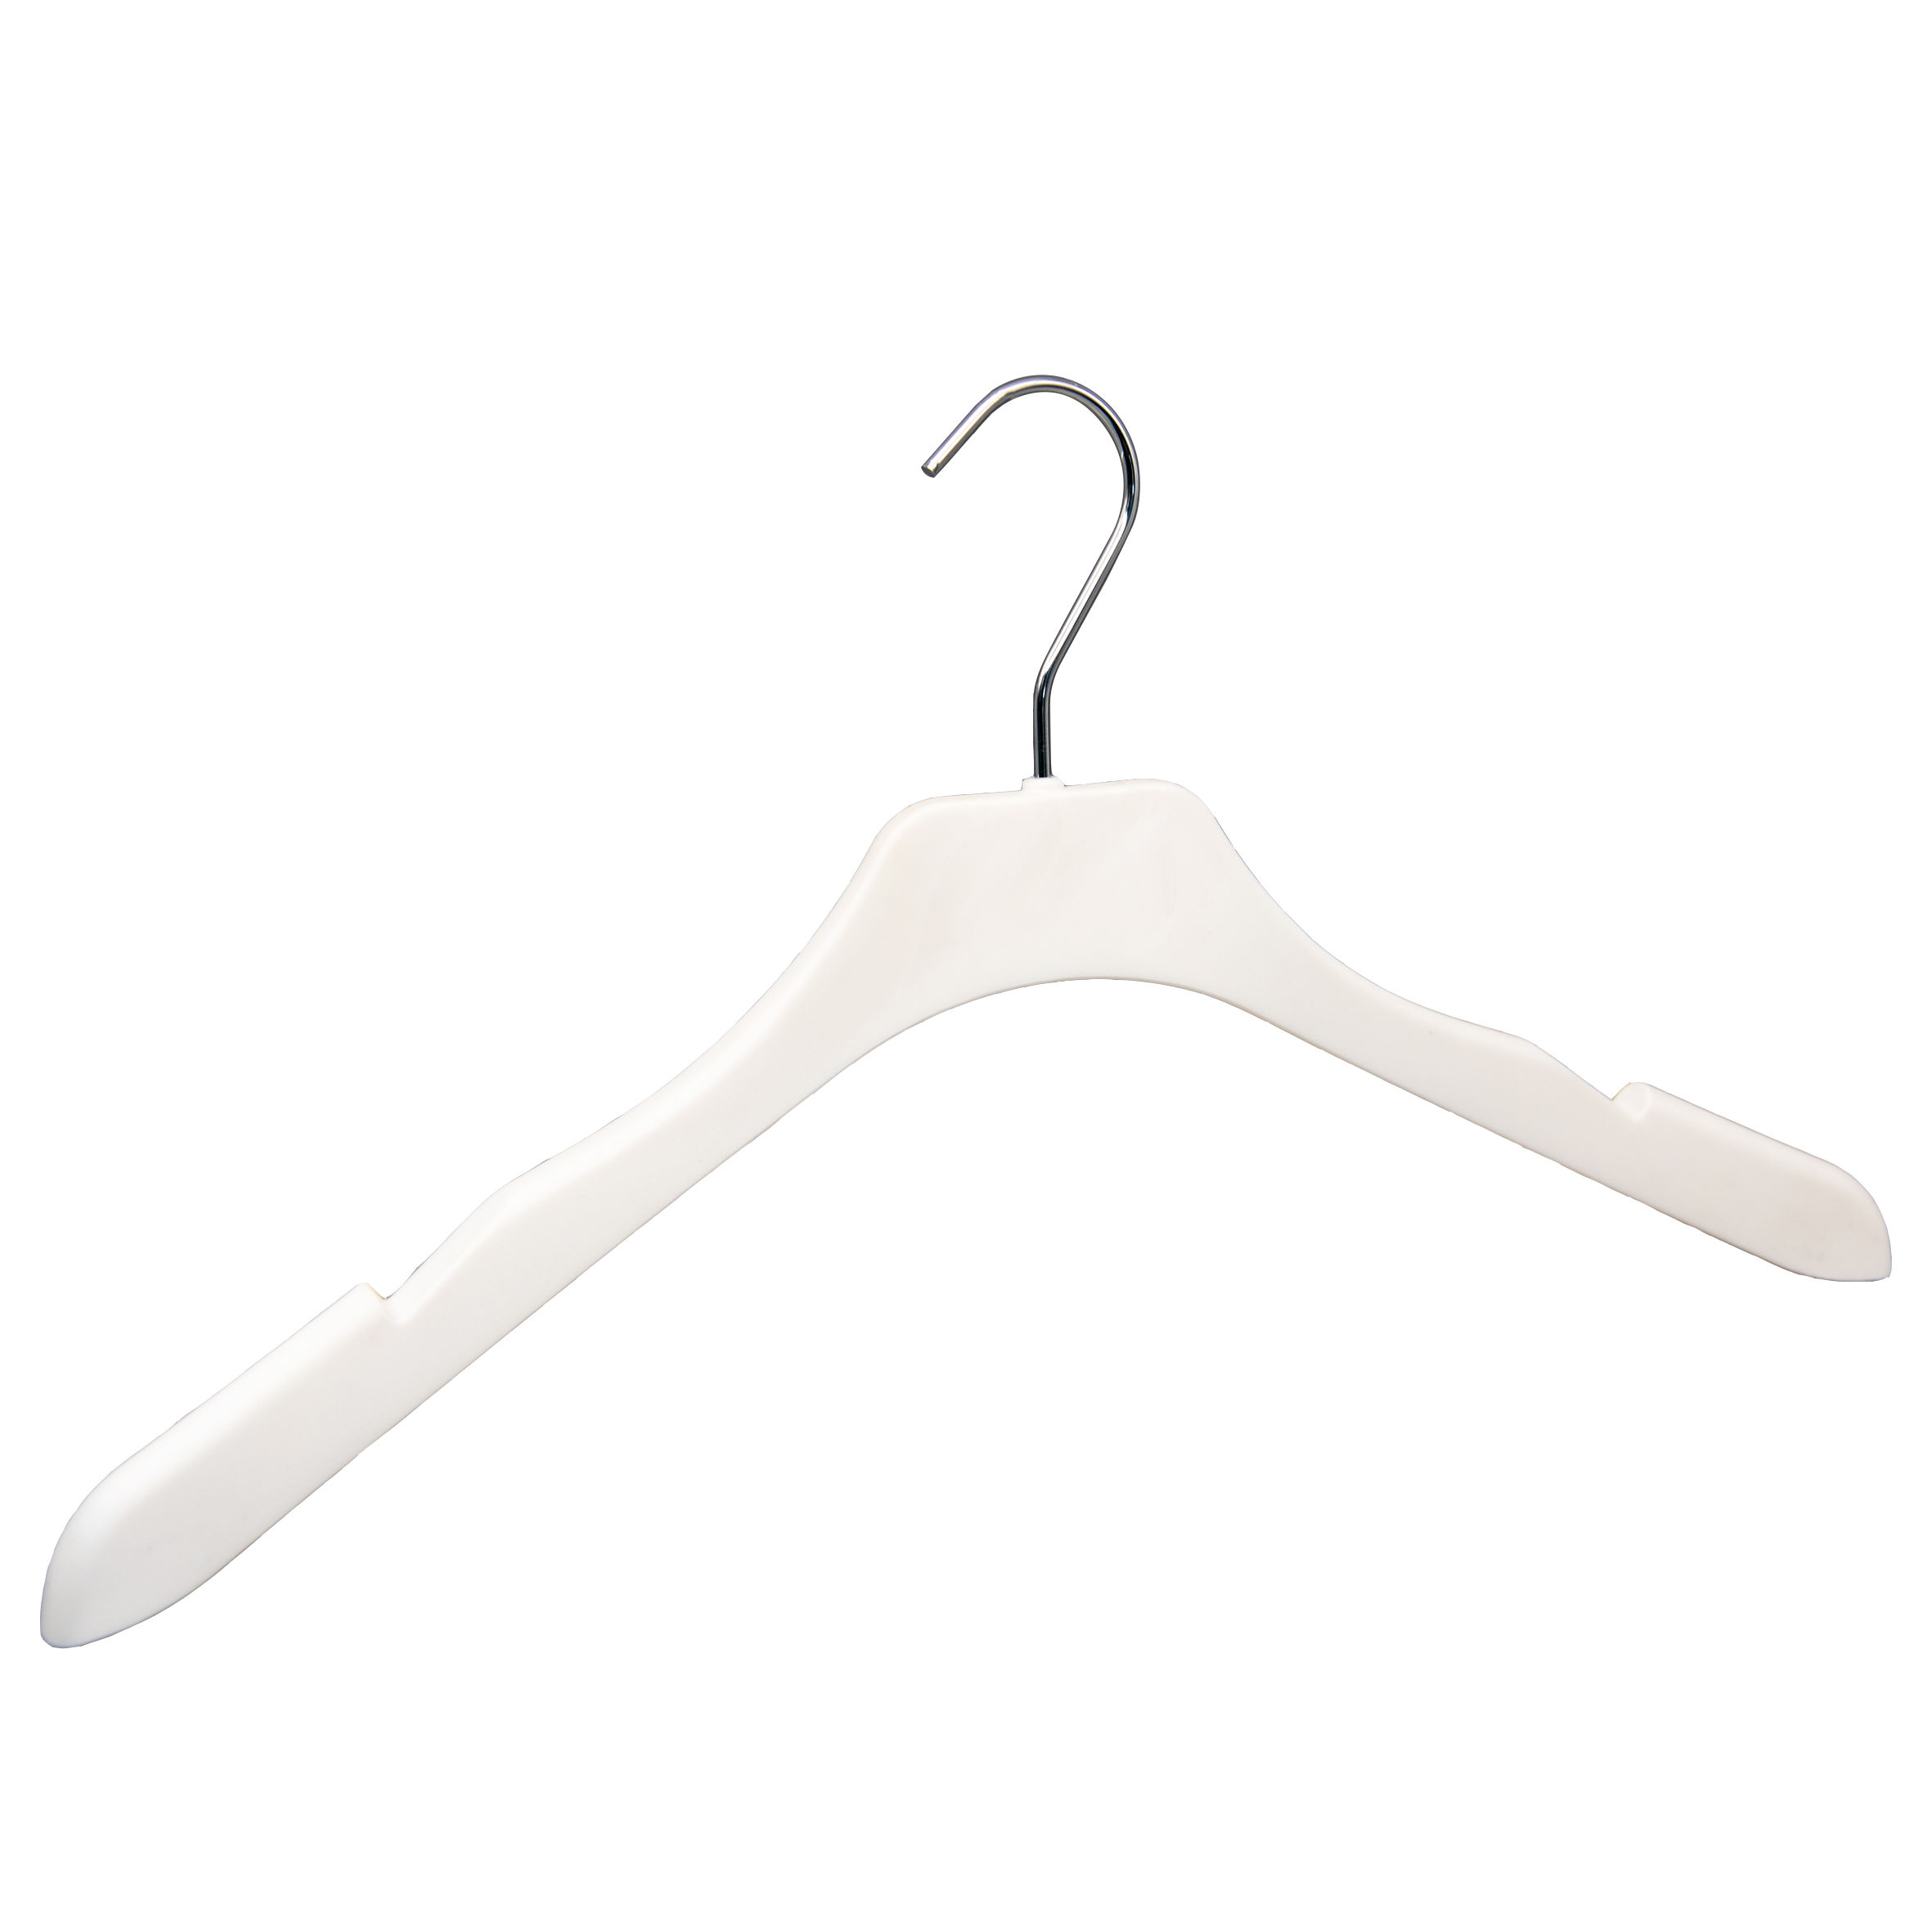 Buy Wholesale China Low Price Bulk White Plastic Clothes Hangers